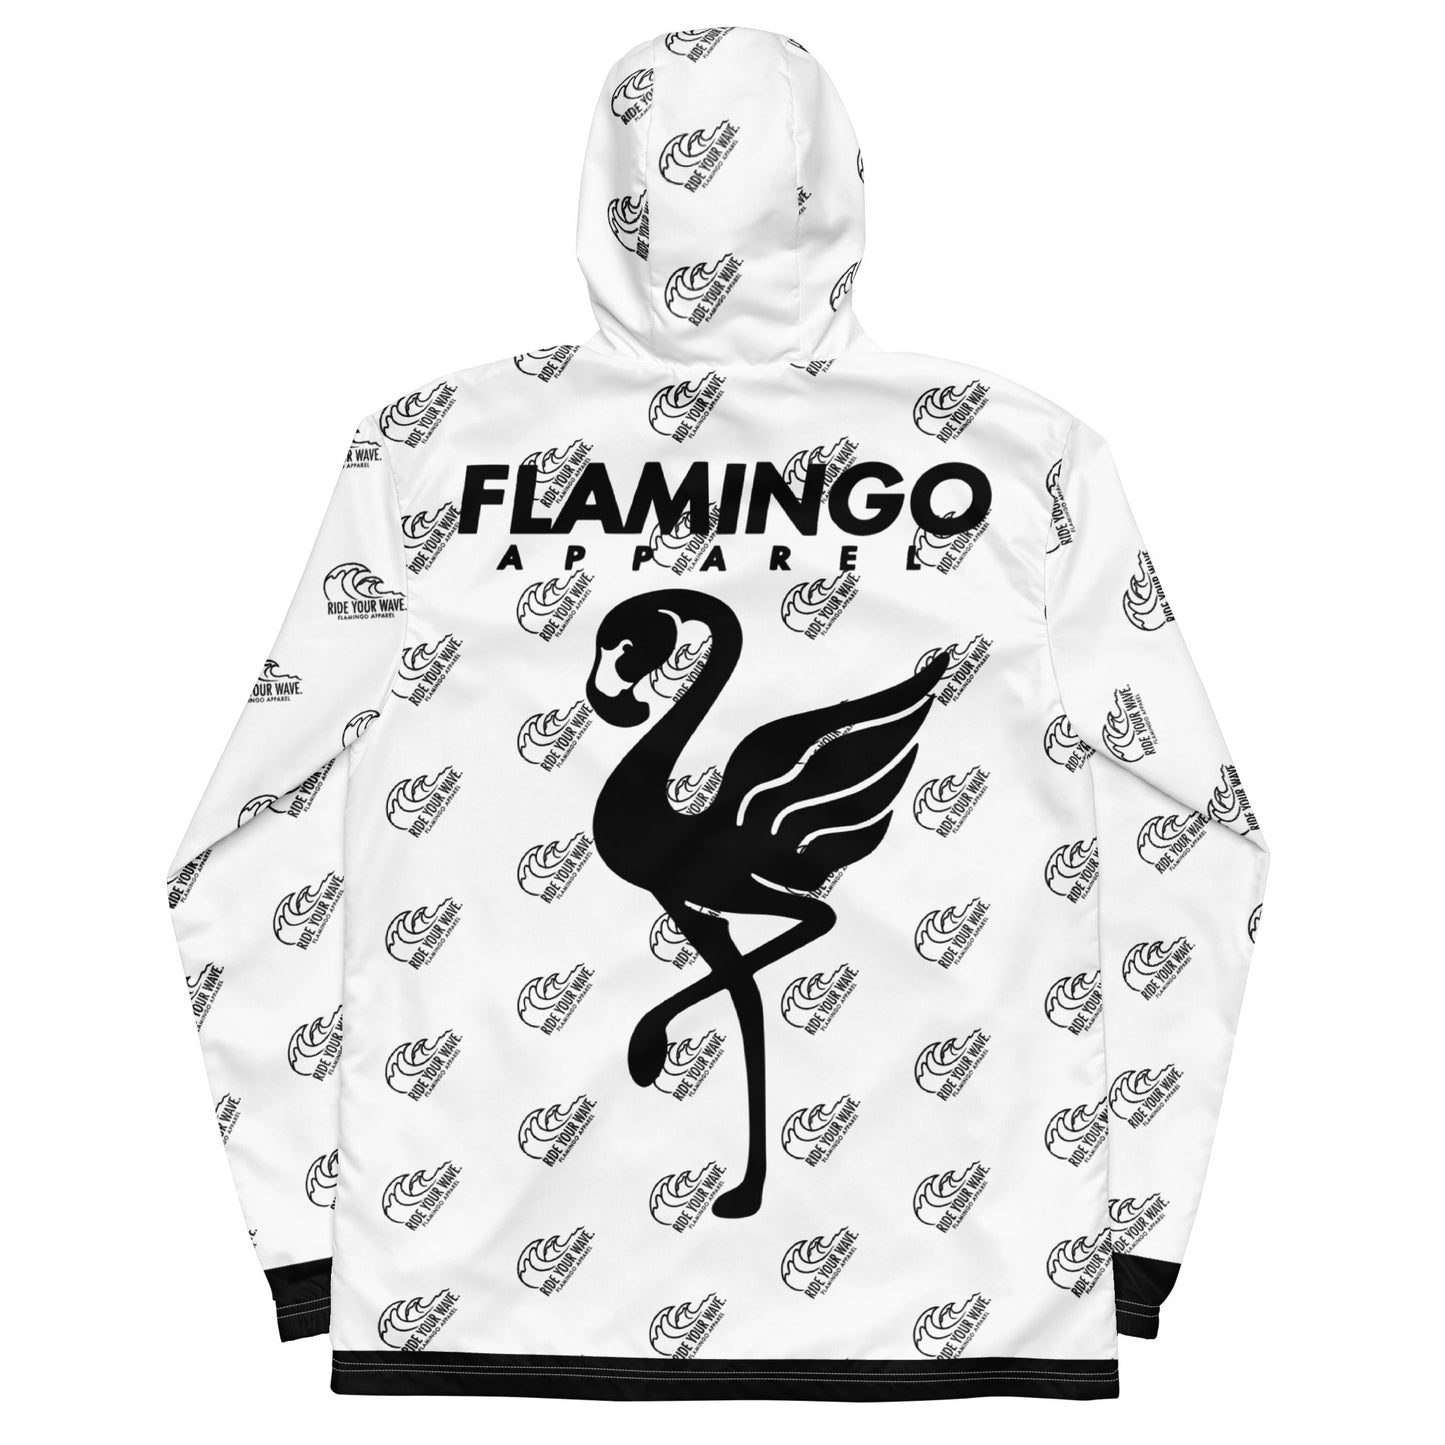 Flamingo Essentials - White Ride Your Wave Unisex windbreaker